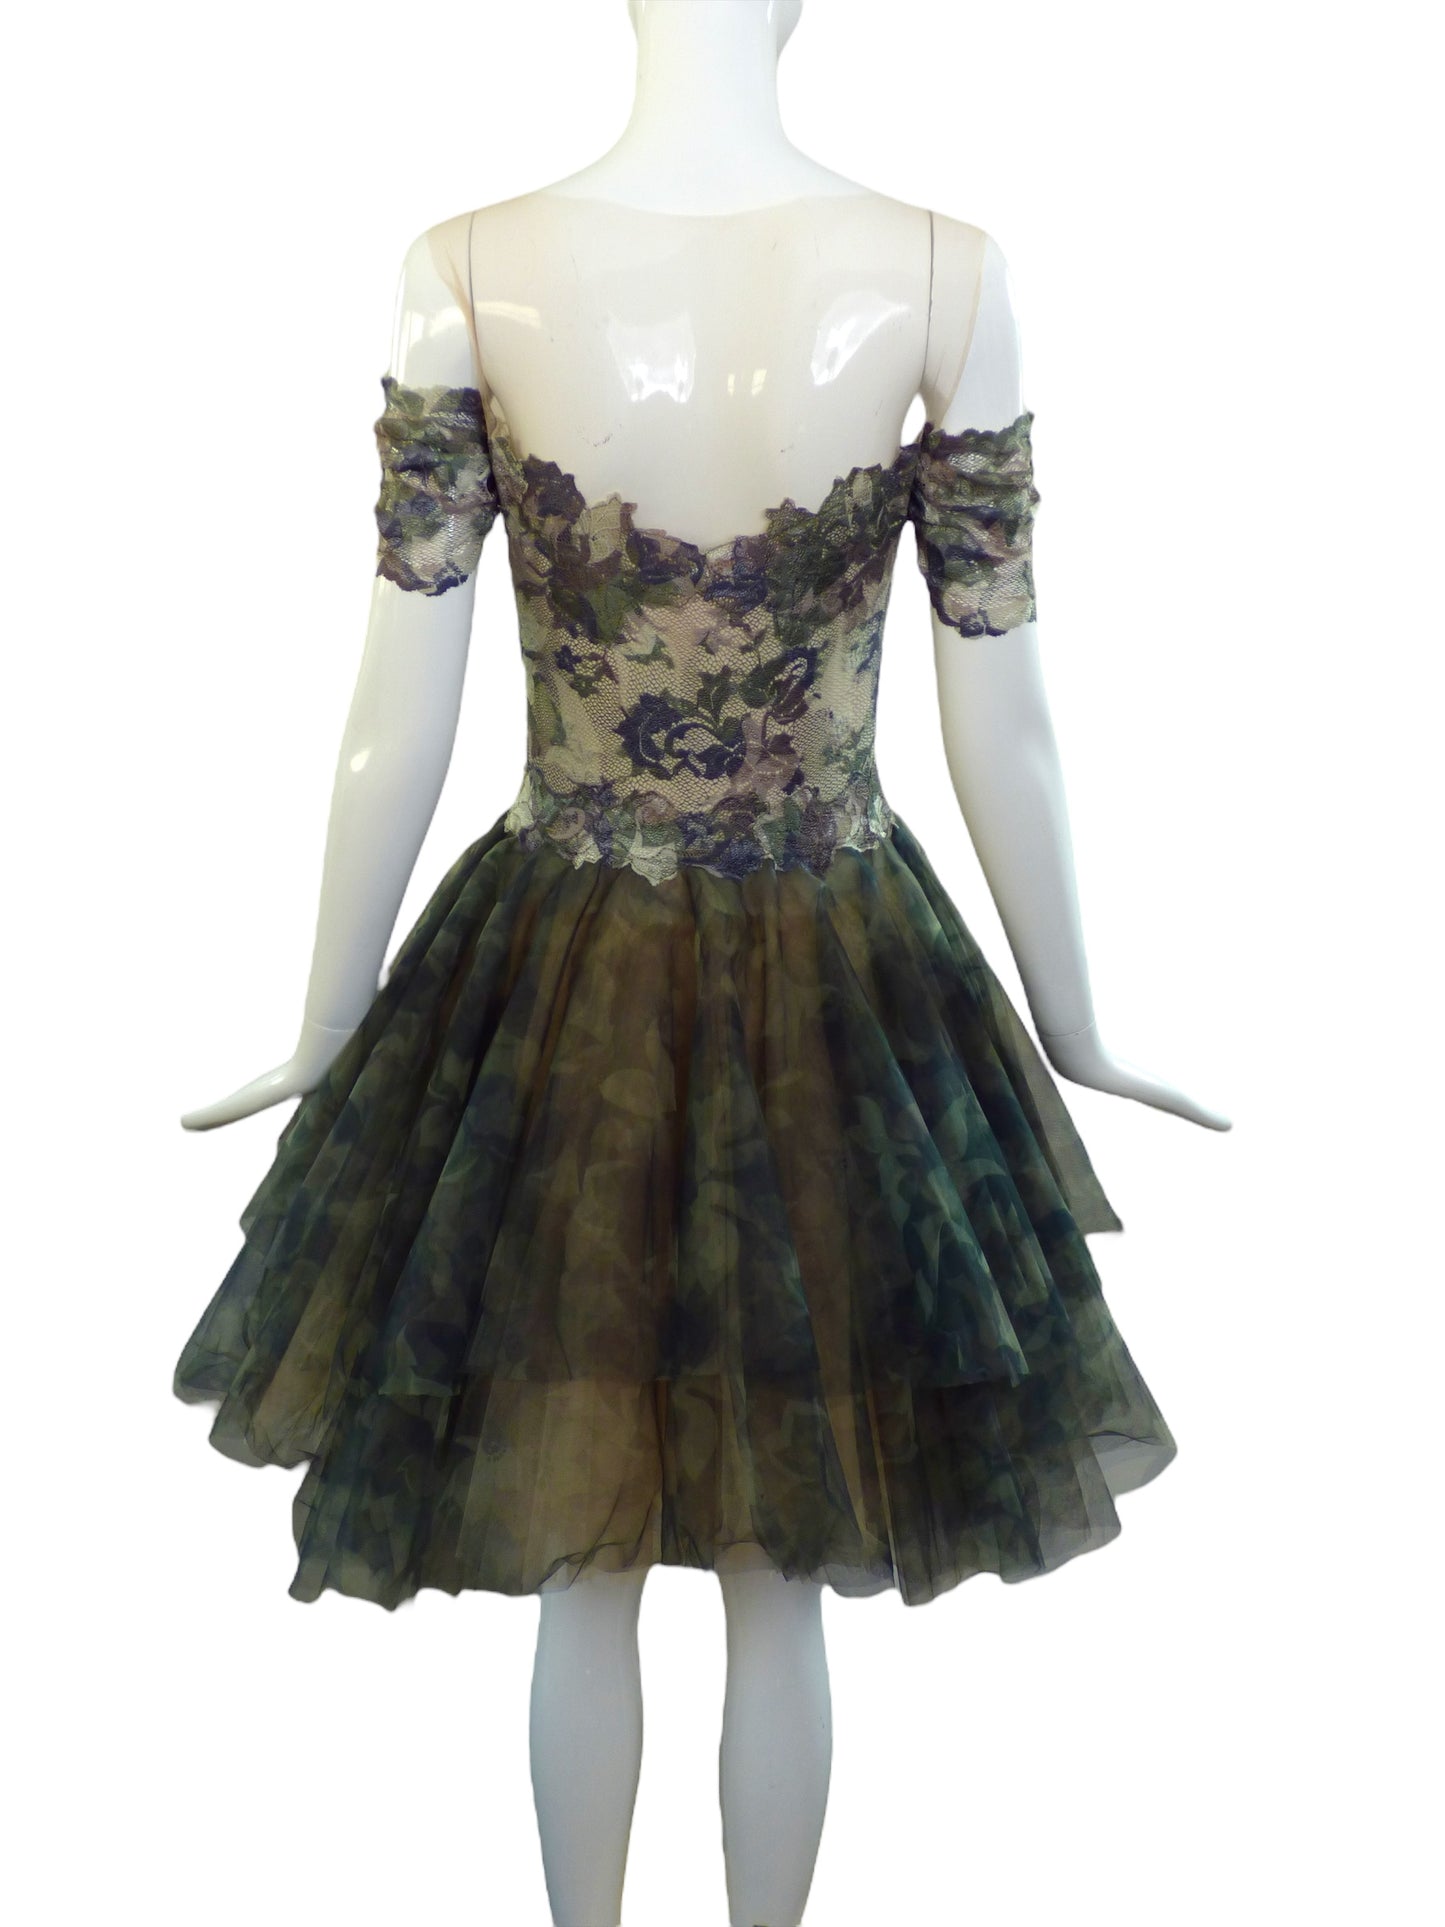 OLVI'S-Camo Tulle & Lace Cocktail Dress, Size-2